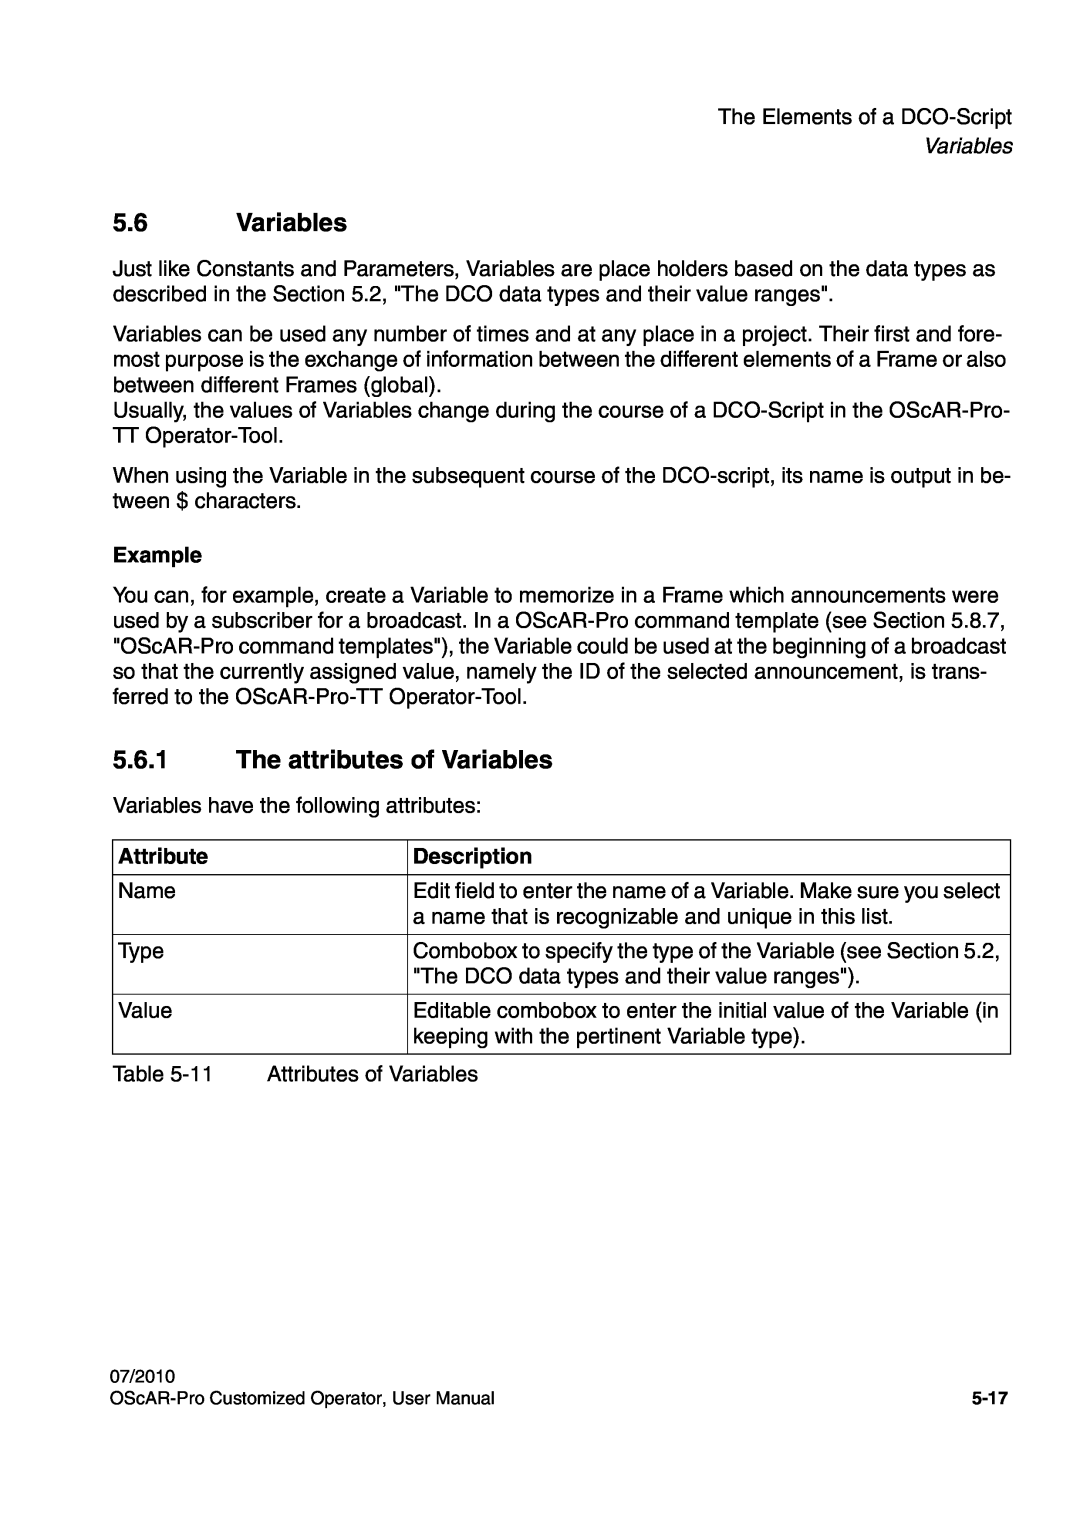 Siemens A31003-51730-U103-7619 user manual 5.6Variables, 5.6.1The attributes of Variables, Example, Attribute, Description 